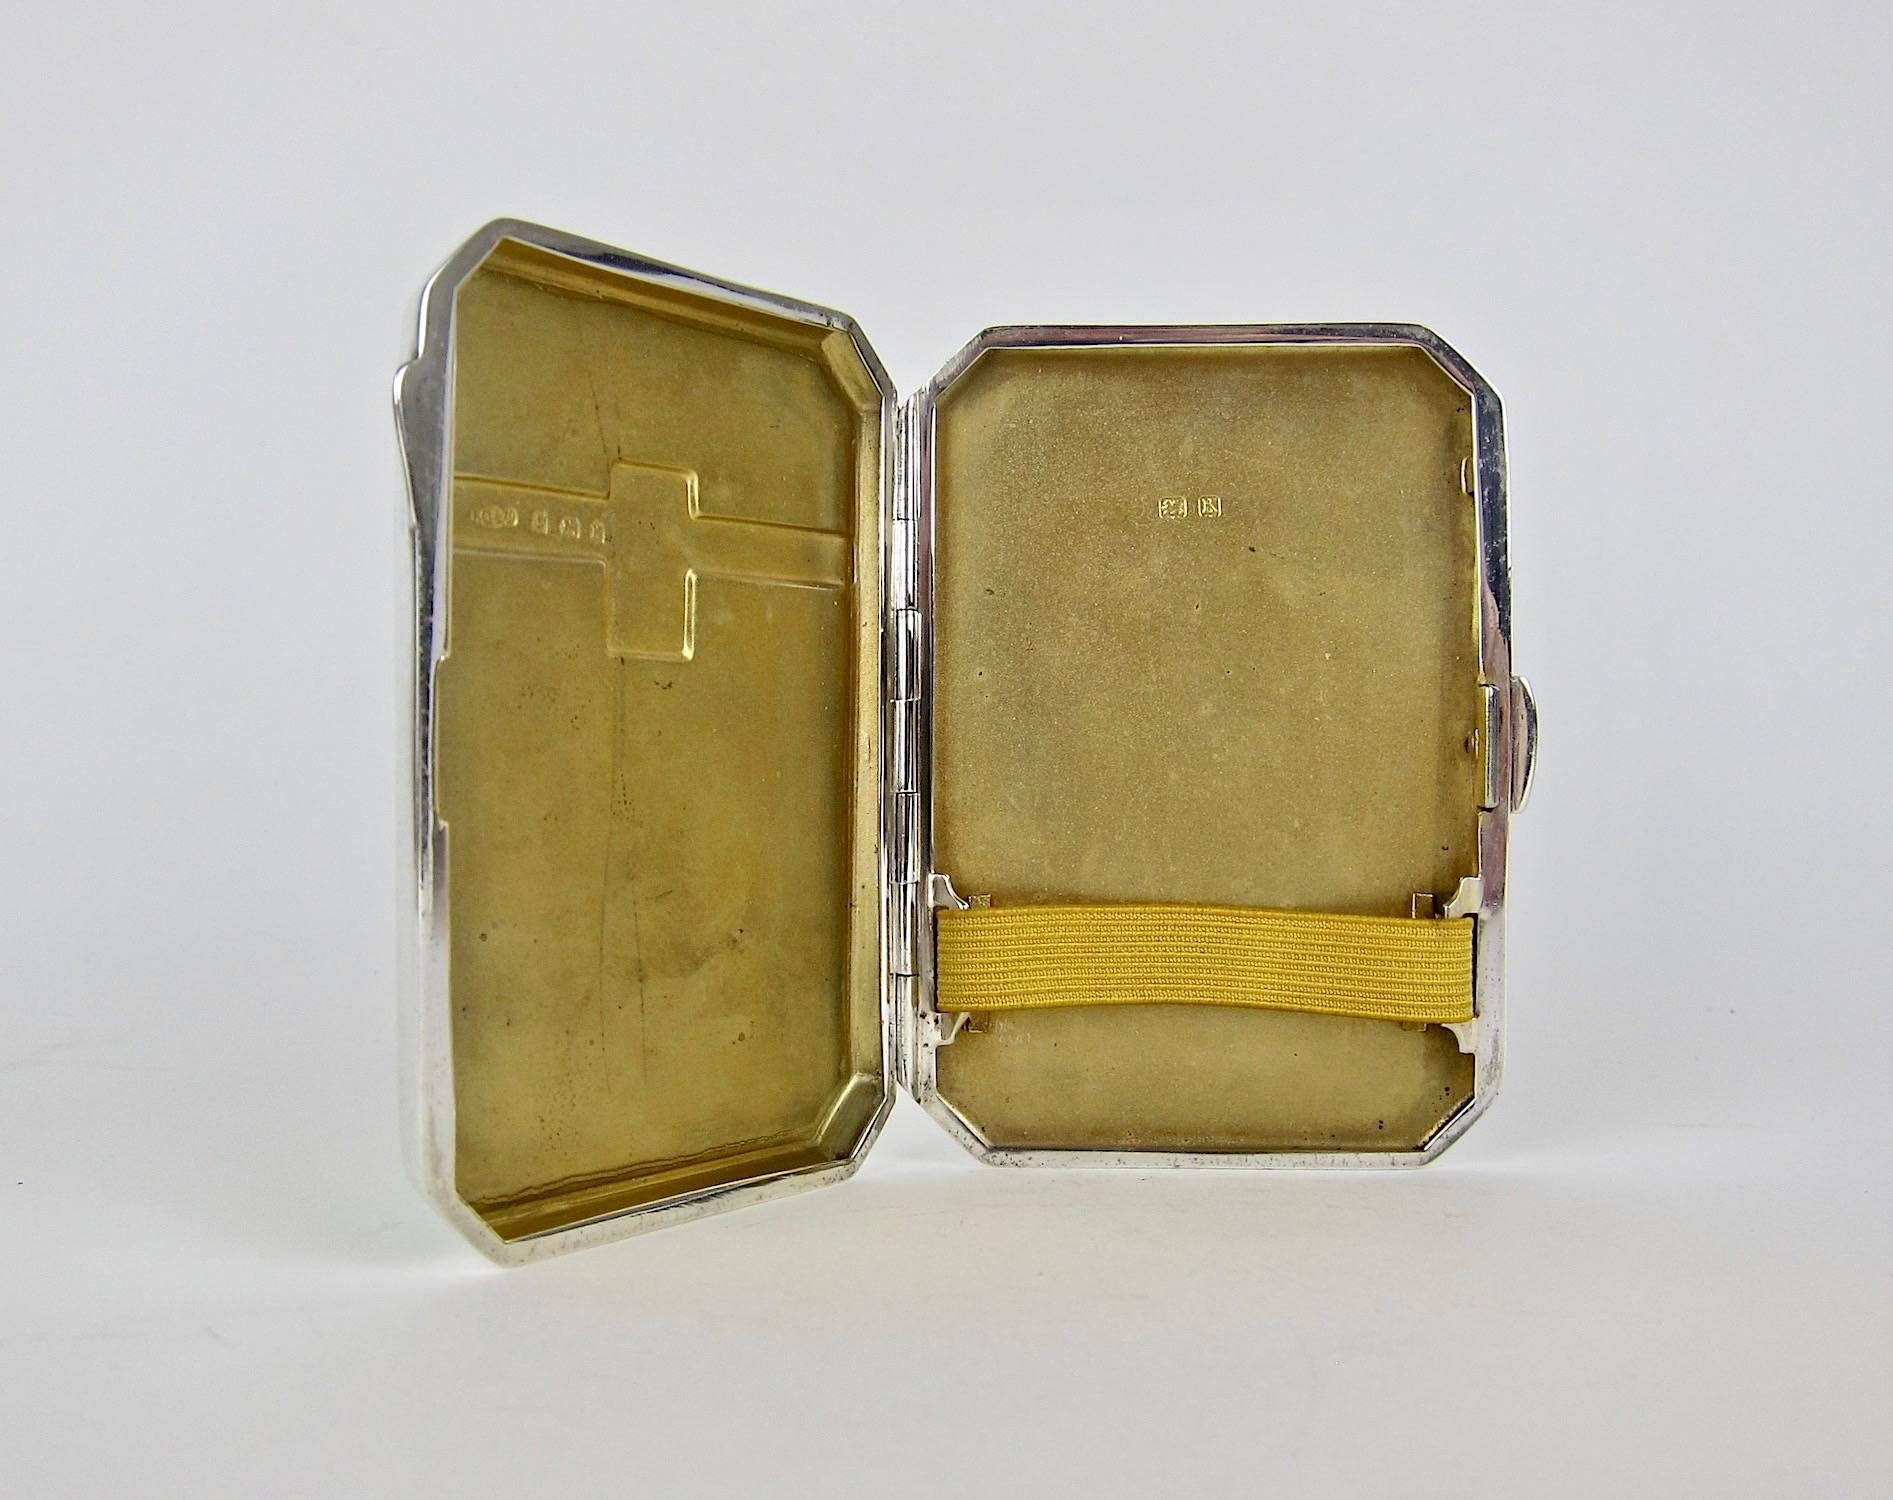 Art Deco Sterling Silver and Guilloche Enamel Cigarette Case by Joseph Gloster 1